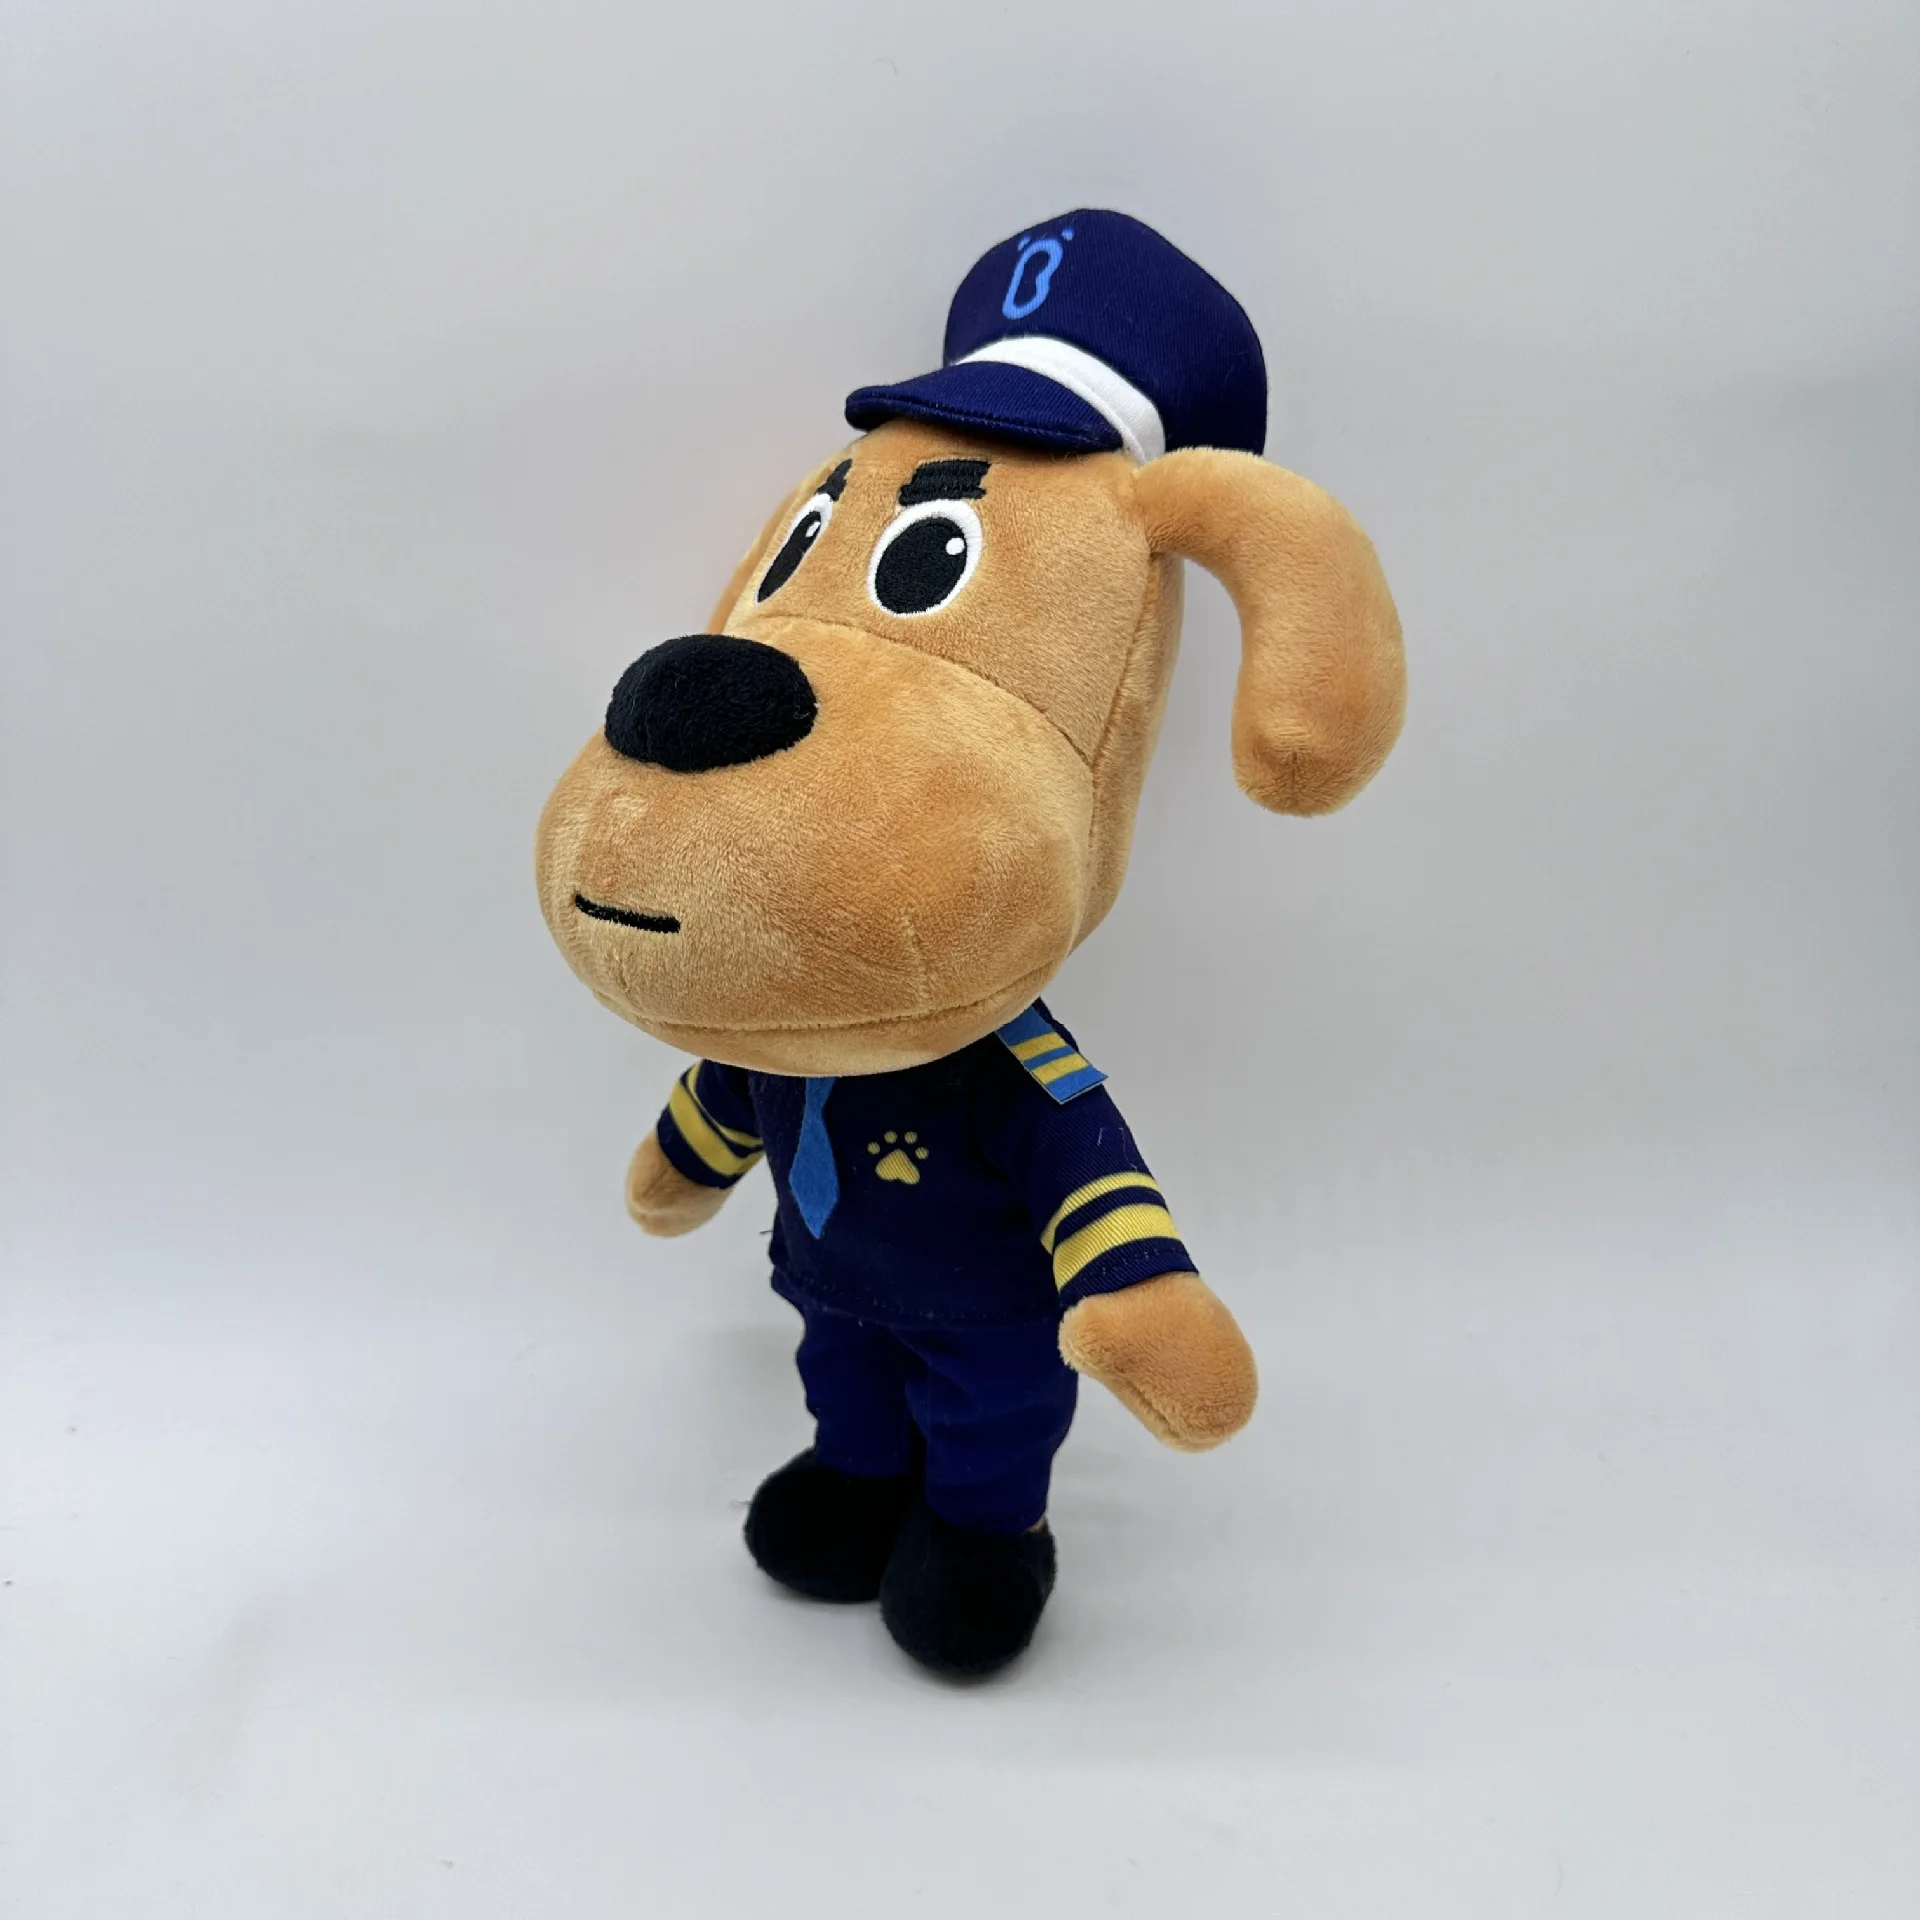 Sheriff Labrador Plush Toys Cartoon Animation Dog Dolls Cute Soft Stuffed For Kids Birthday Christmas Gift